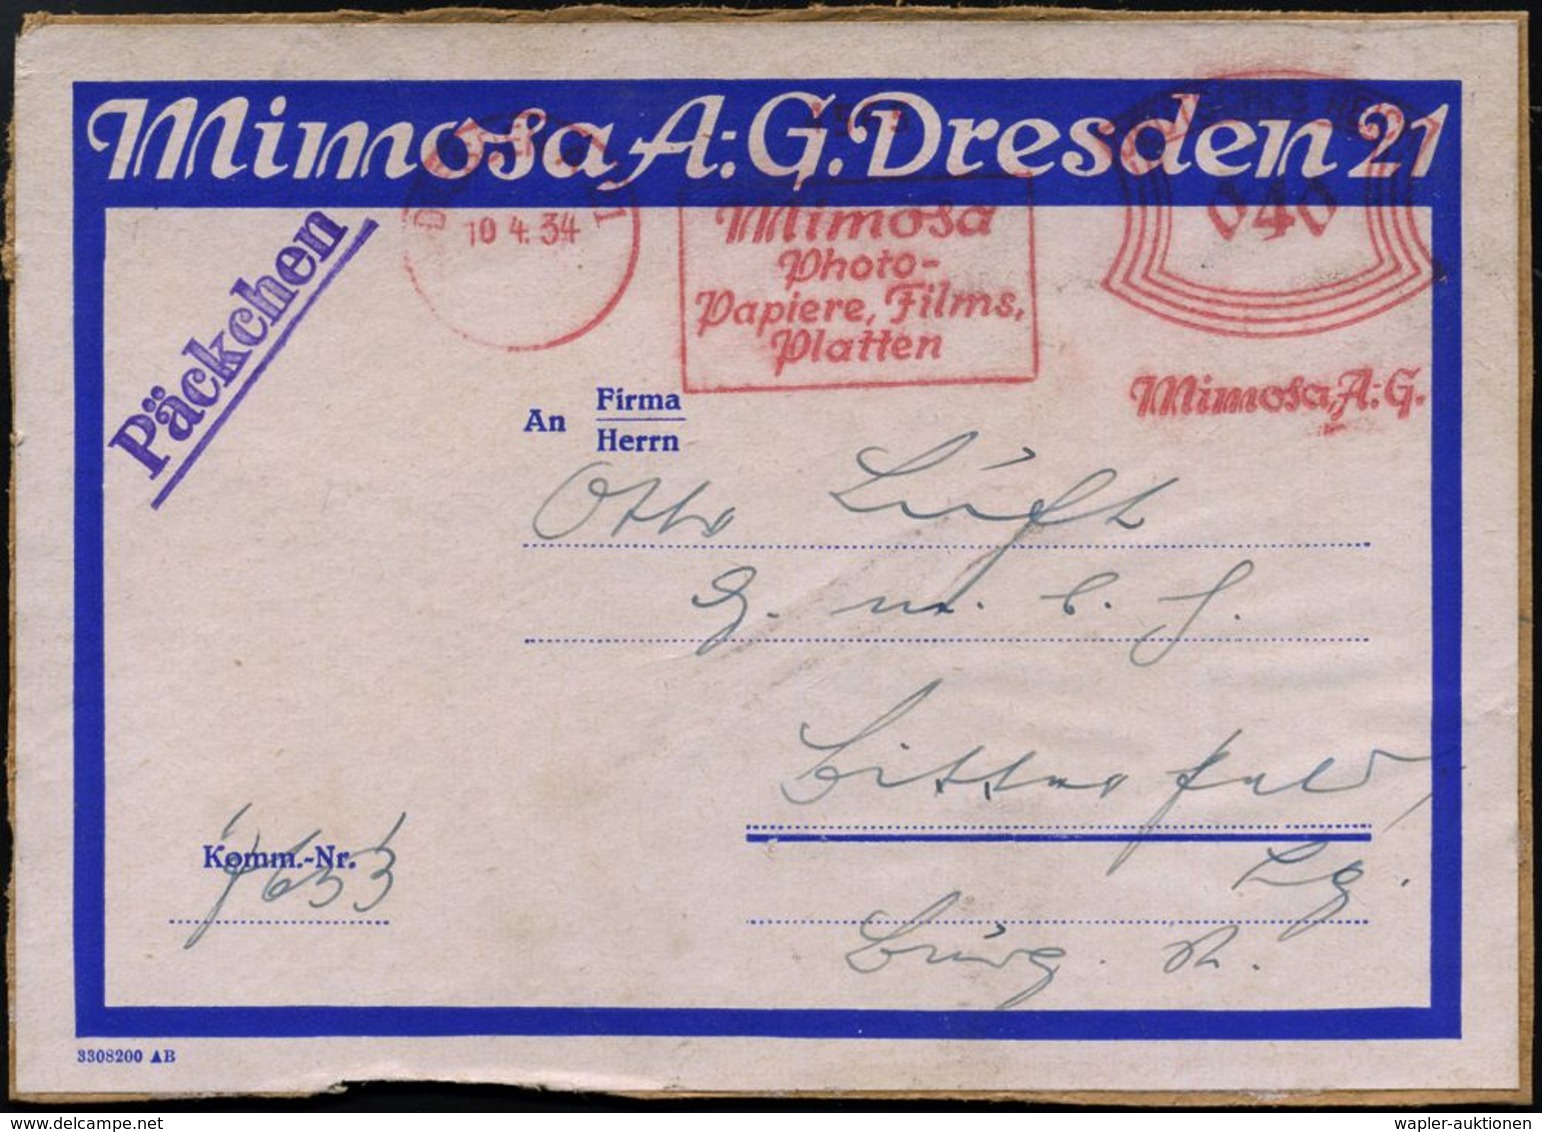 FOTOGRAFIE / KAMERAS / FOTOINDUSTRIE : DRESDEN A 21/ Mimosa/ Photo-/ Papiere,Films/ Platten.. 1934 (10.4.) AFS 040 Pf. A - Photography